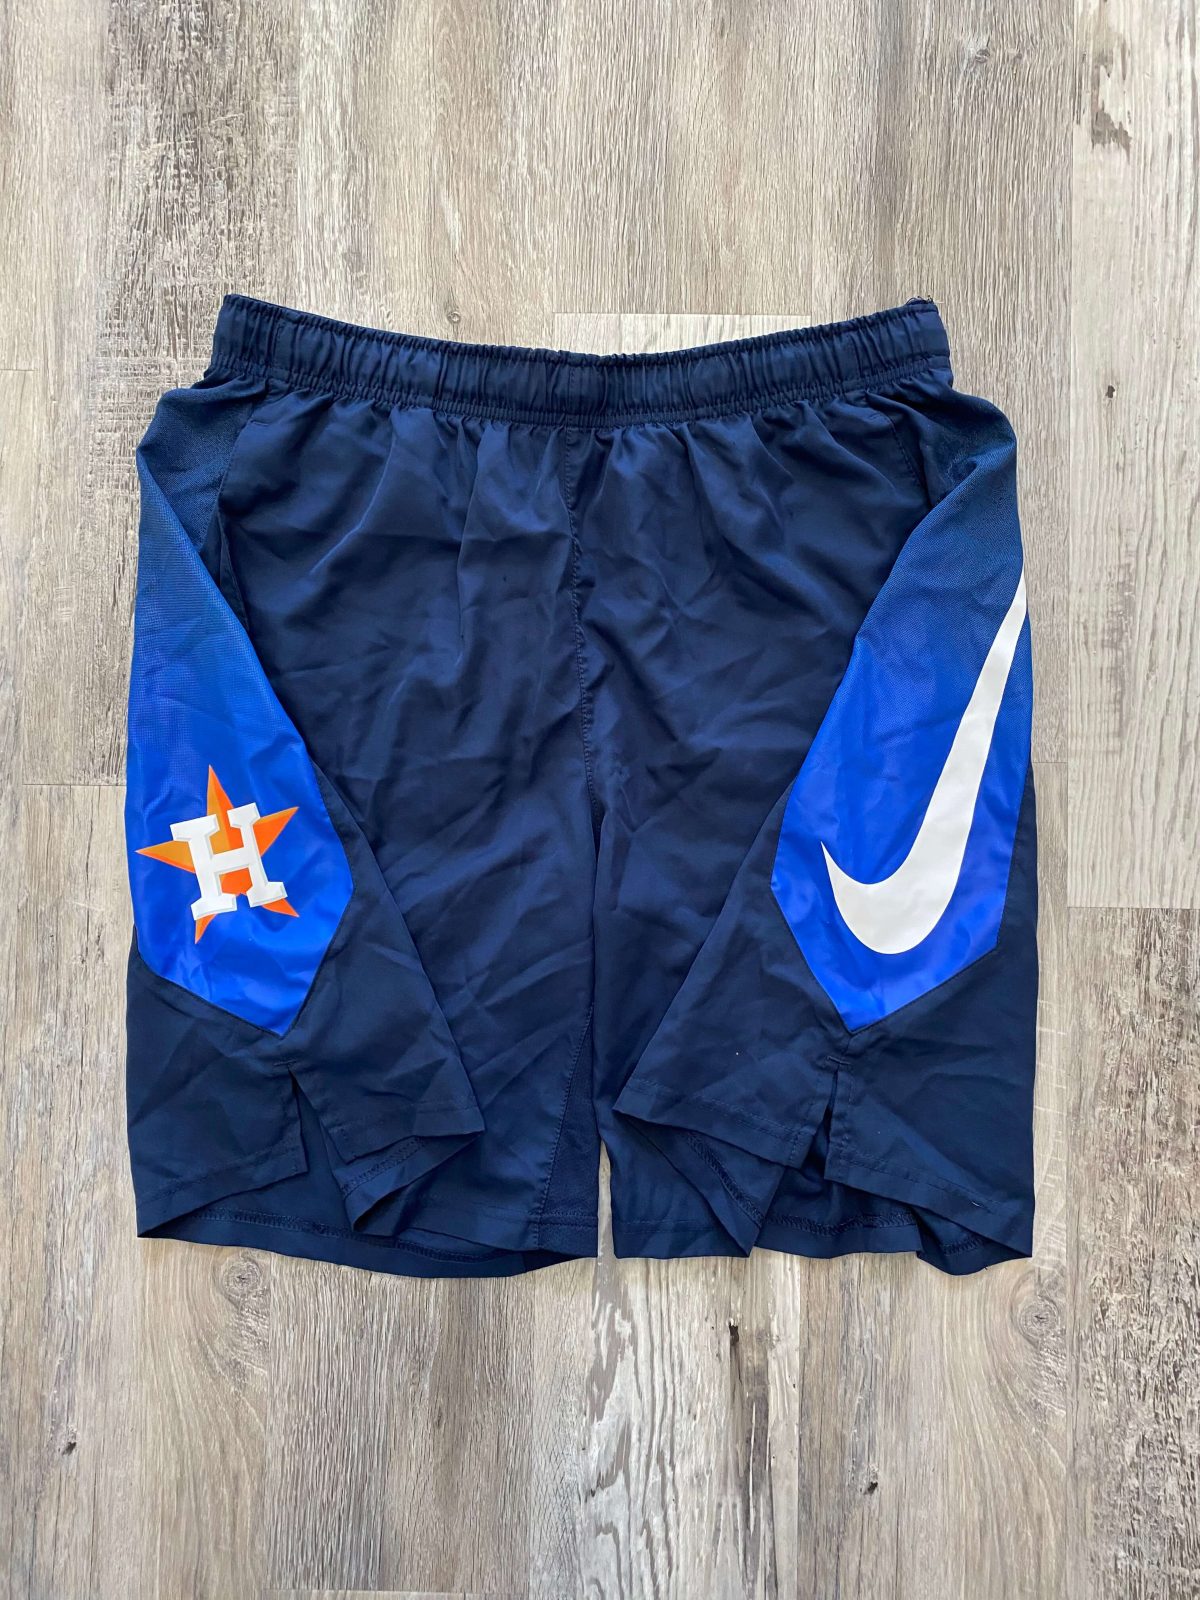 Houston Astros Nike Dri-Fit Shorts : NARP Clothing